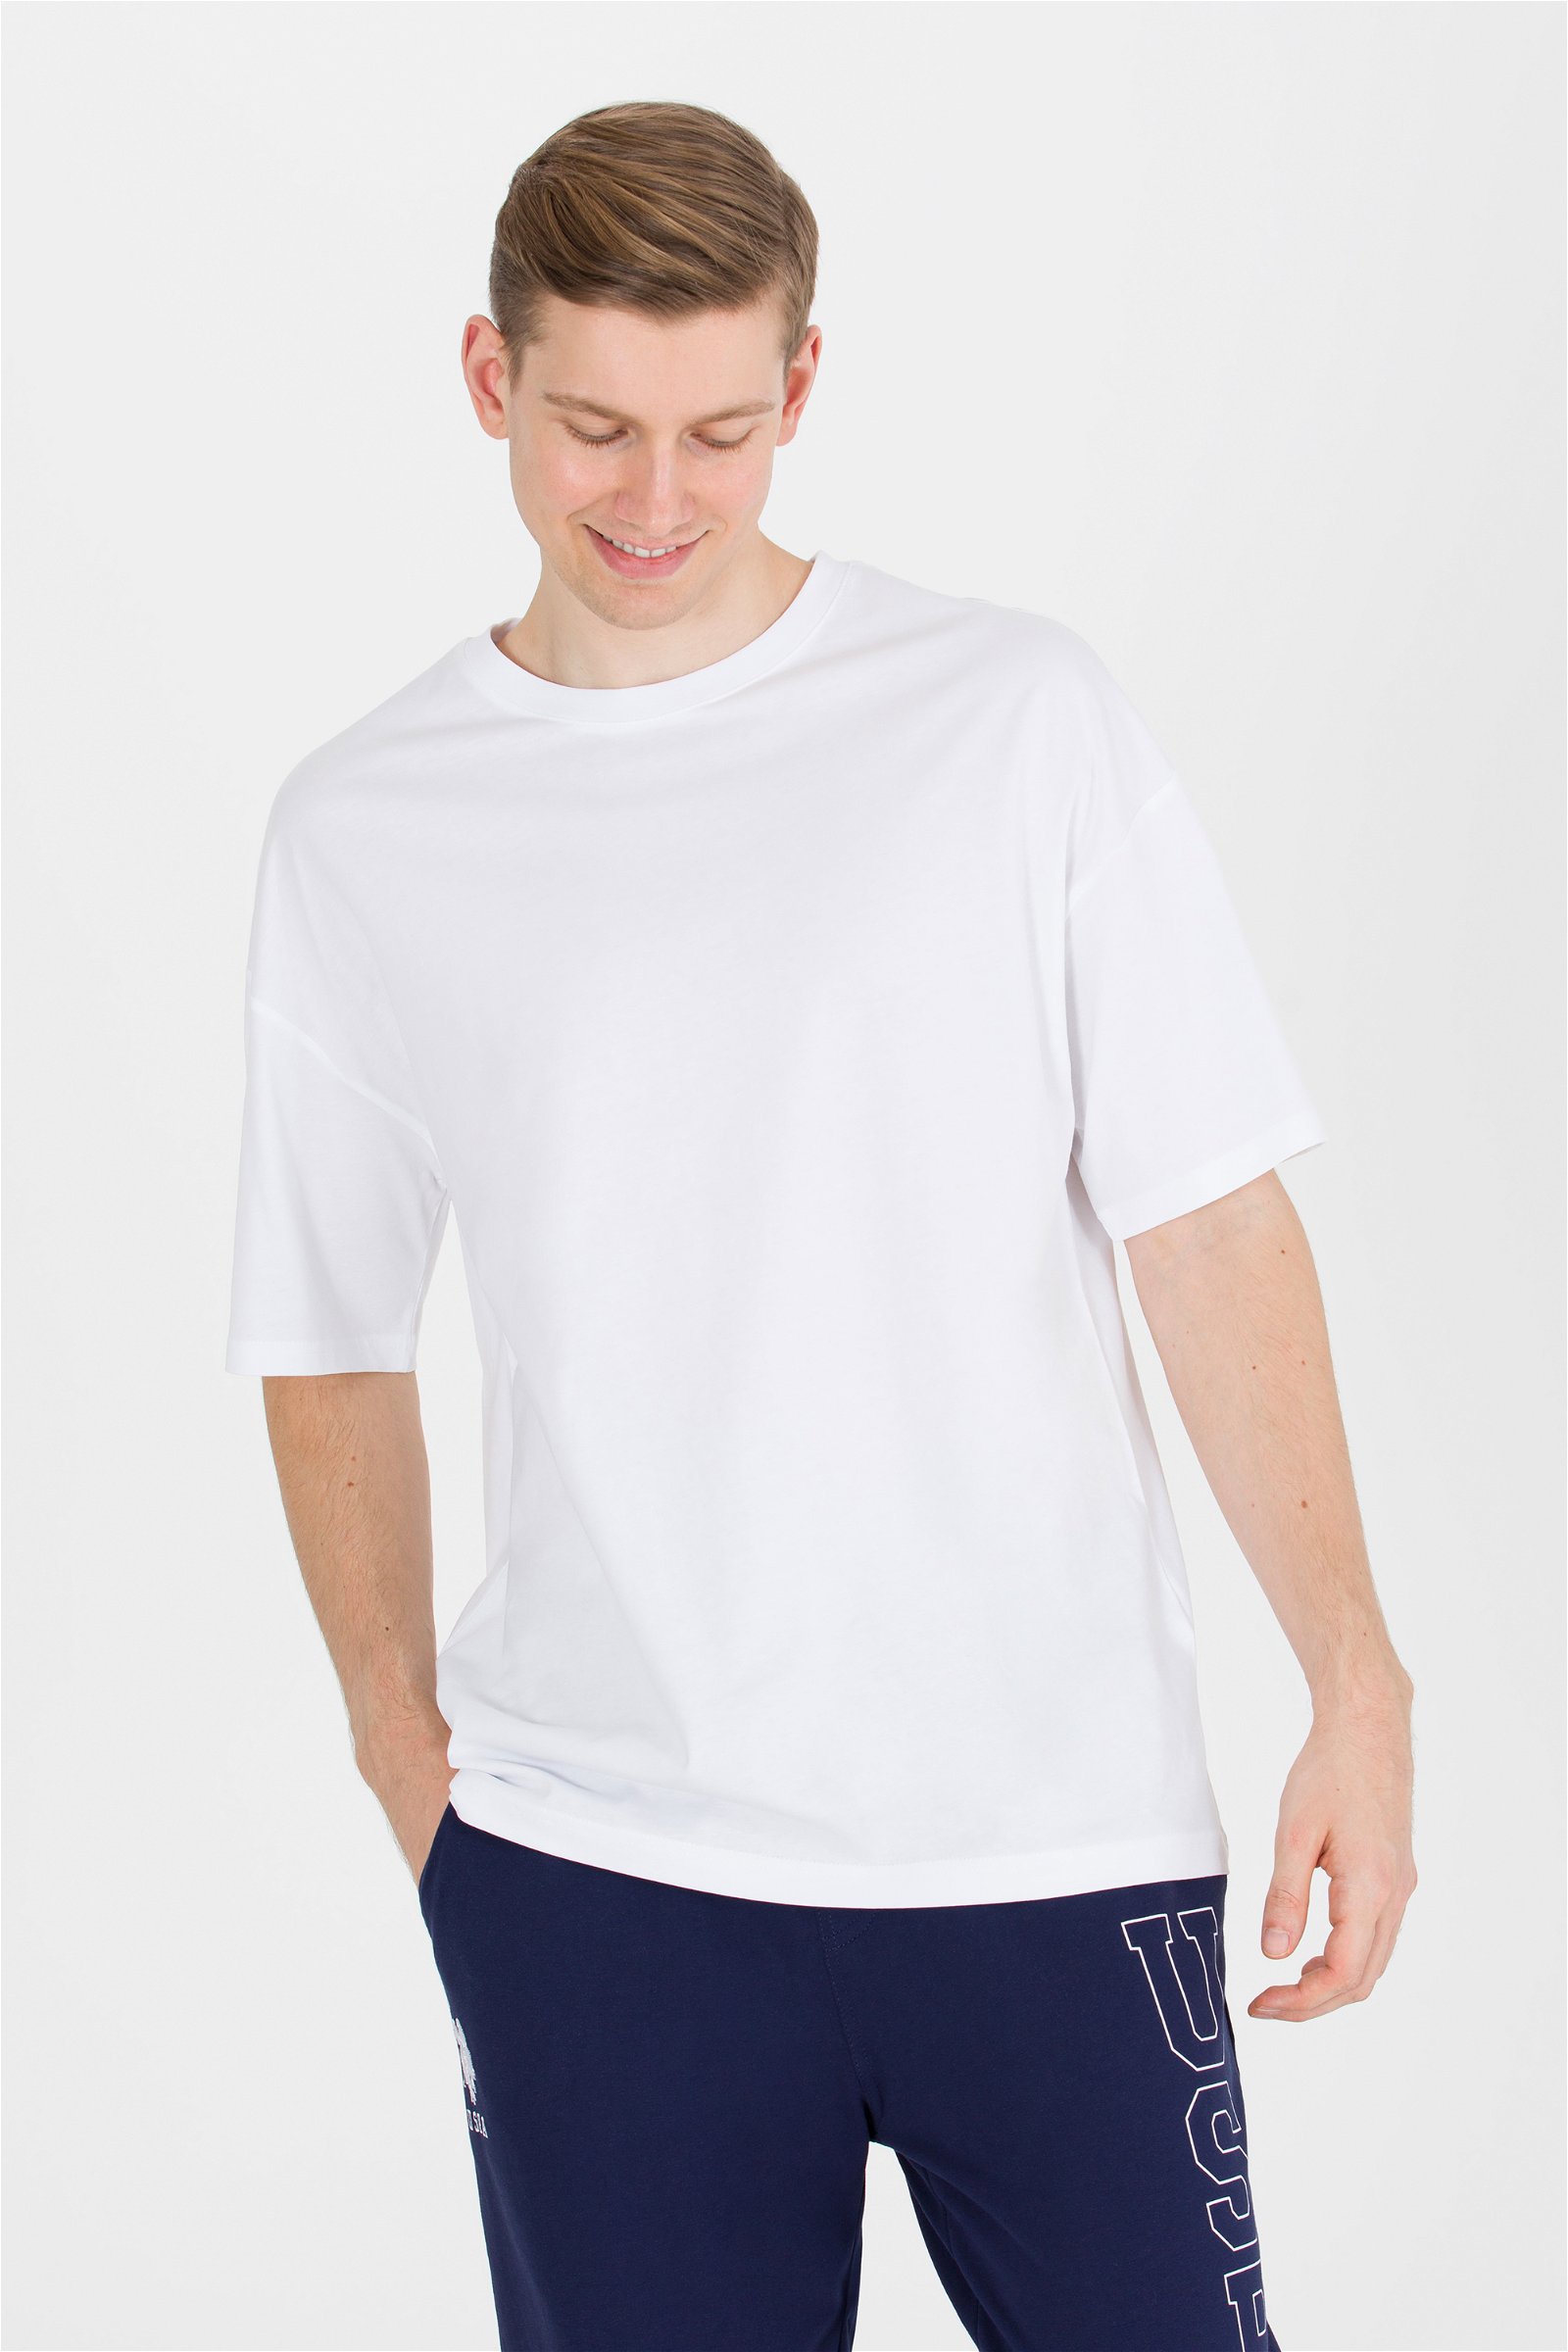 تی شرت یقه گرد سفید  COMFORT LONG آستین کوتاه مردانه یو اس پولو | US POLO ASSN